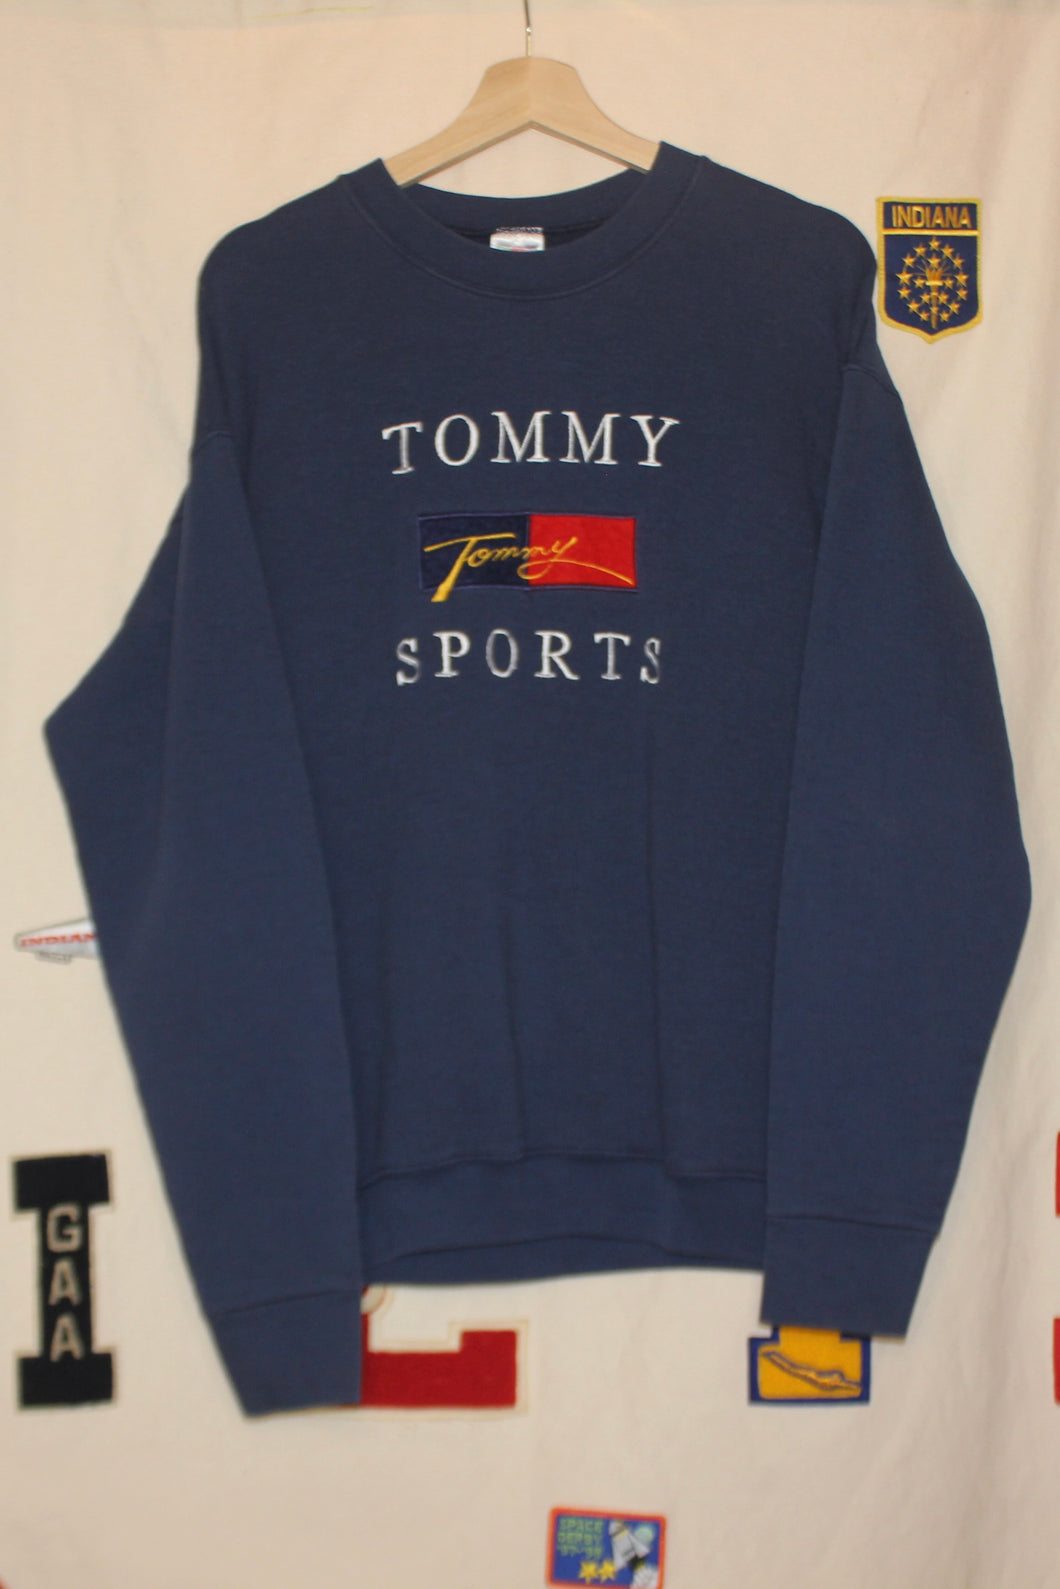 Tommy Hilfiger Sports Bootleg Crewneck: L